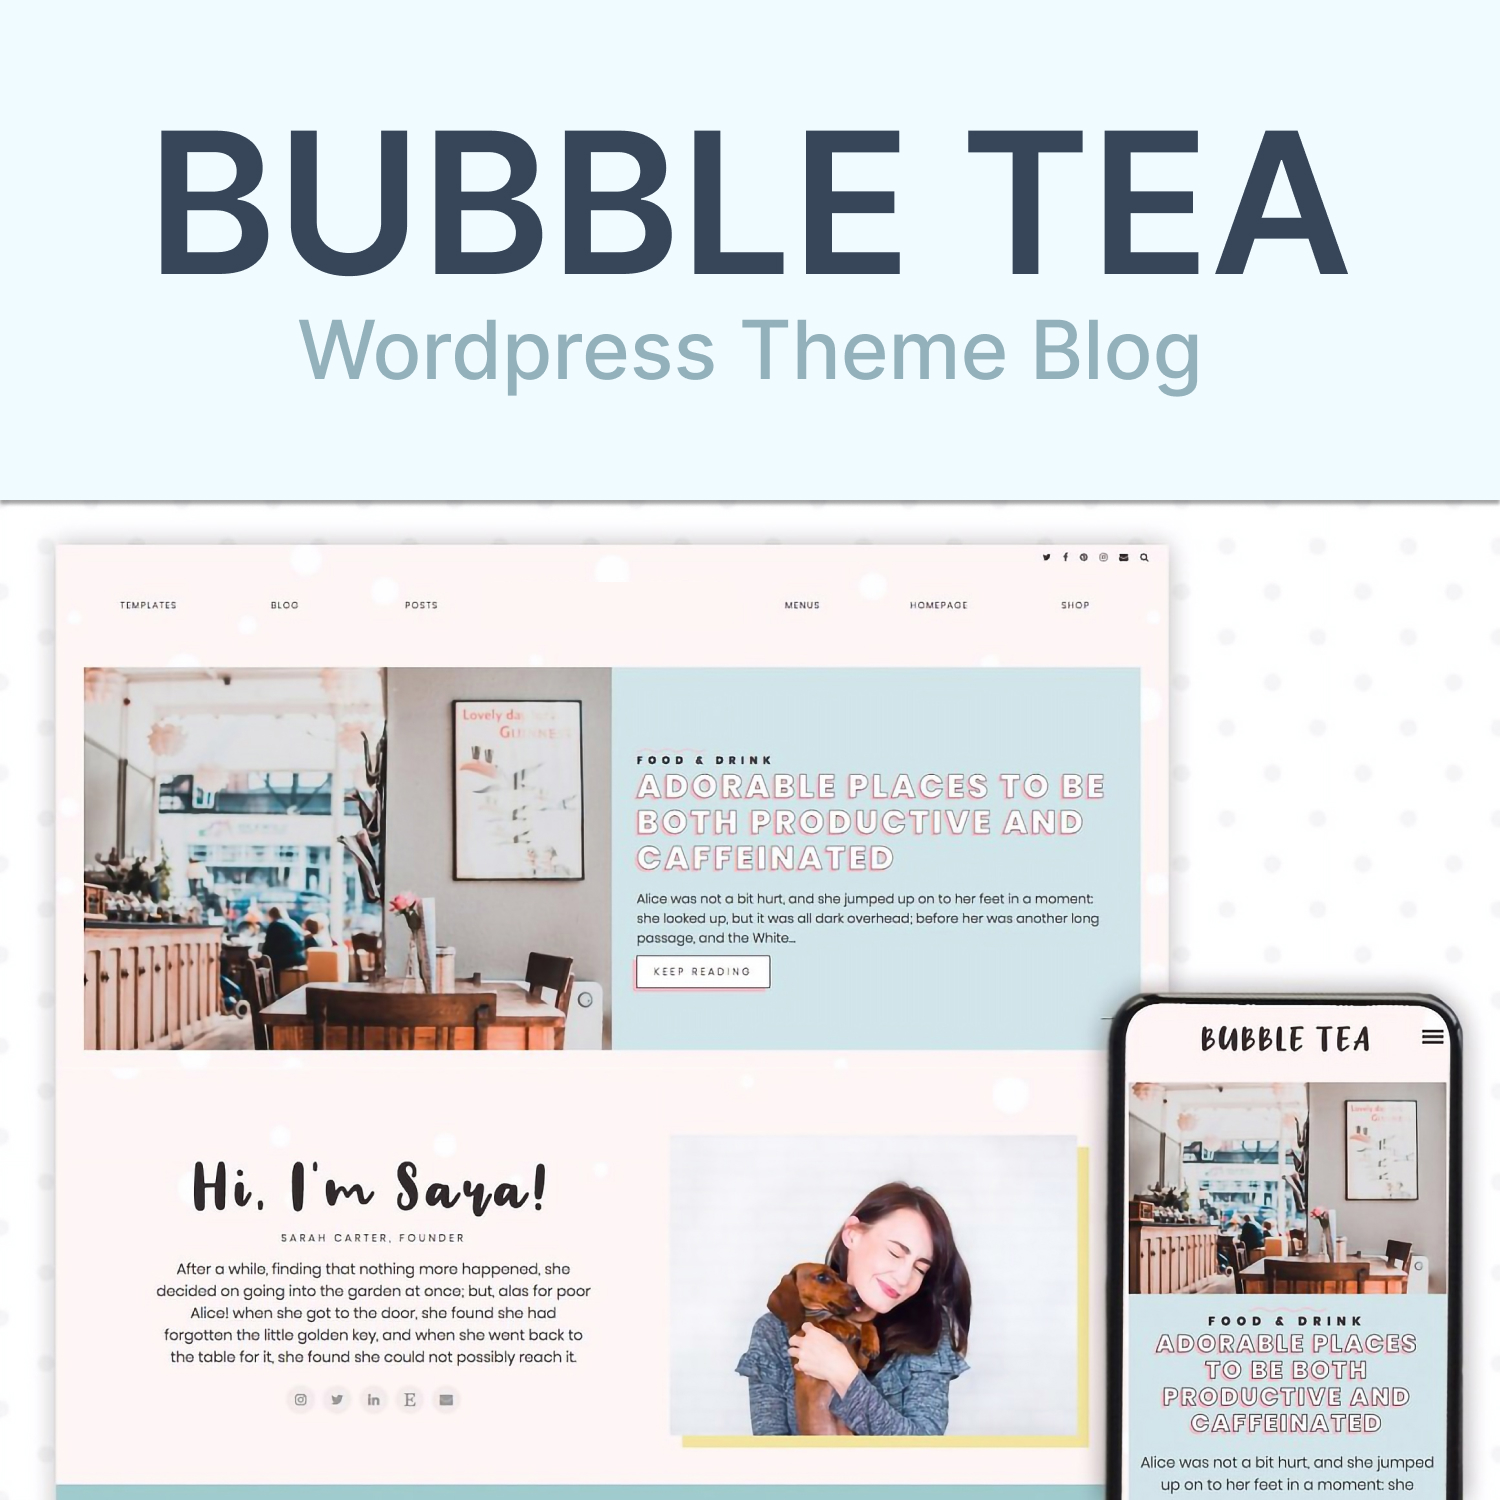 Bubble Tea Wordpress Theme Blog.